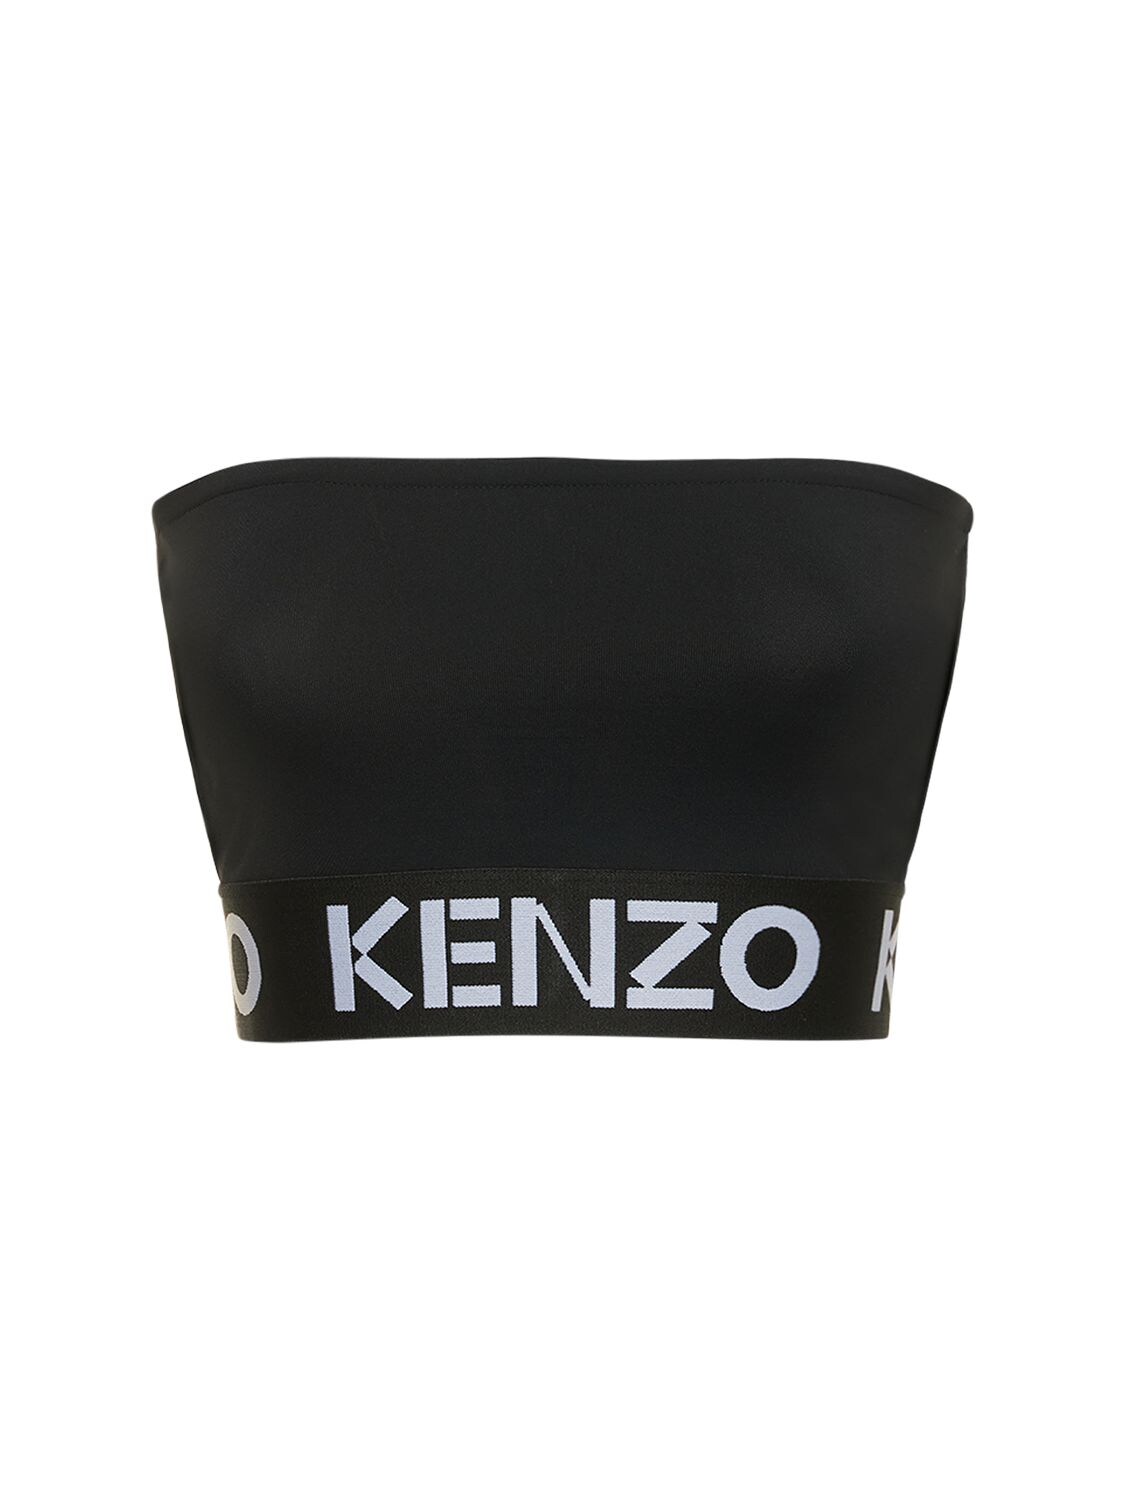 Kenzo Tube Top